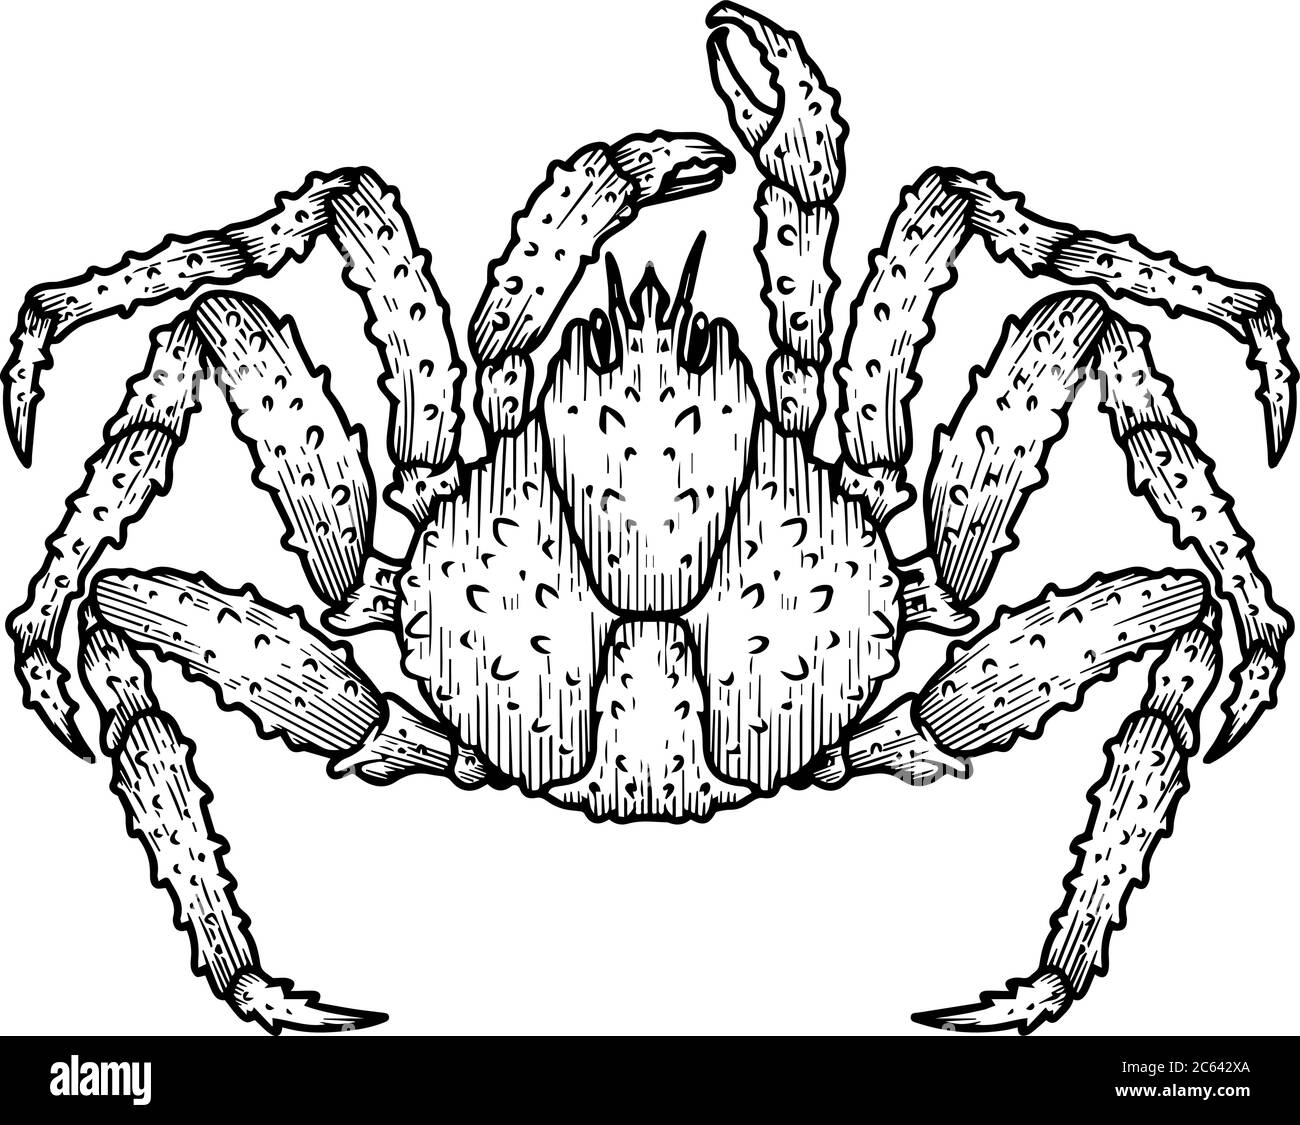 Illustration der japanischen Spinnenkrabbe. Gestaltungselement für Logo, Etikett, Schild, Emblem, Plakat. Vektorgrafik Stock Vektor